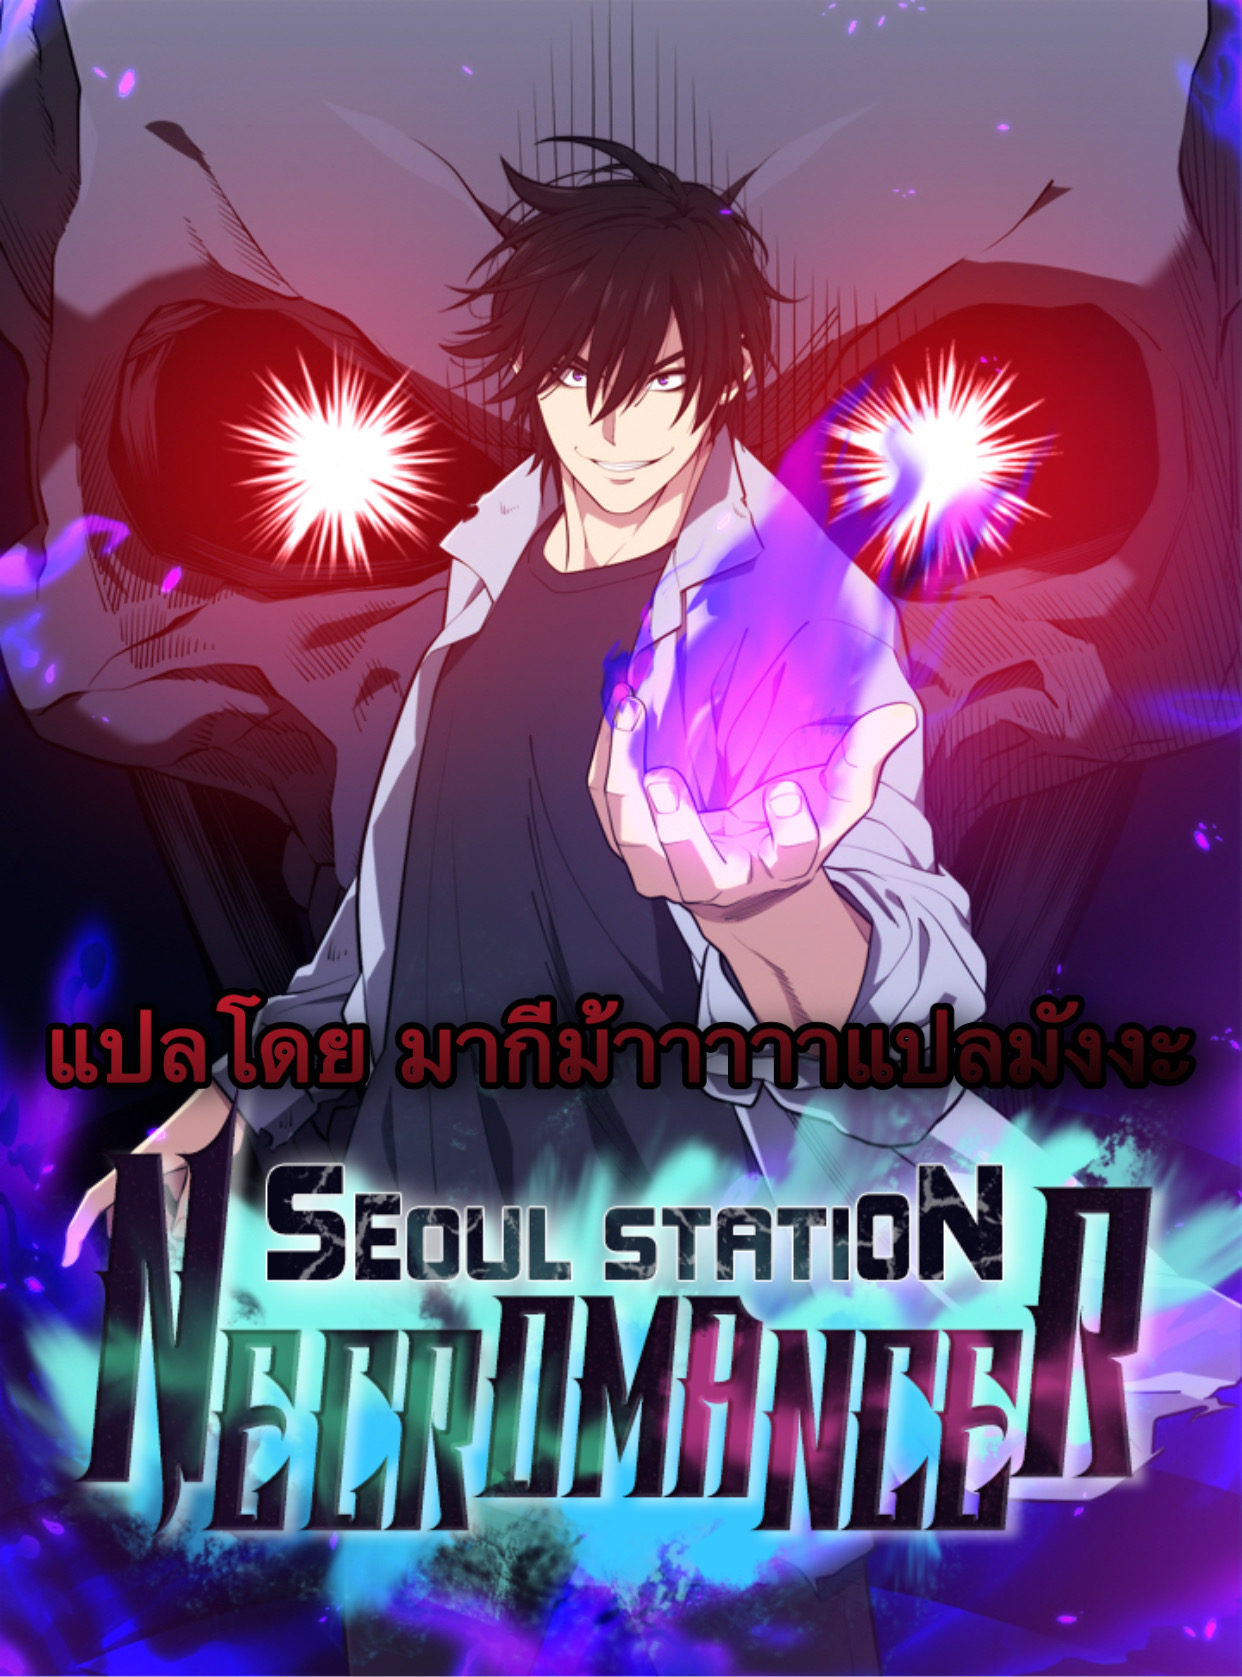 Seoul Station’s Necromancer 2 (1)